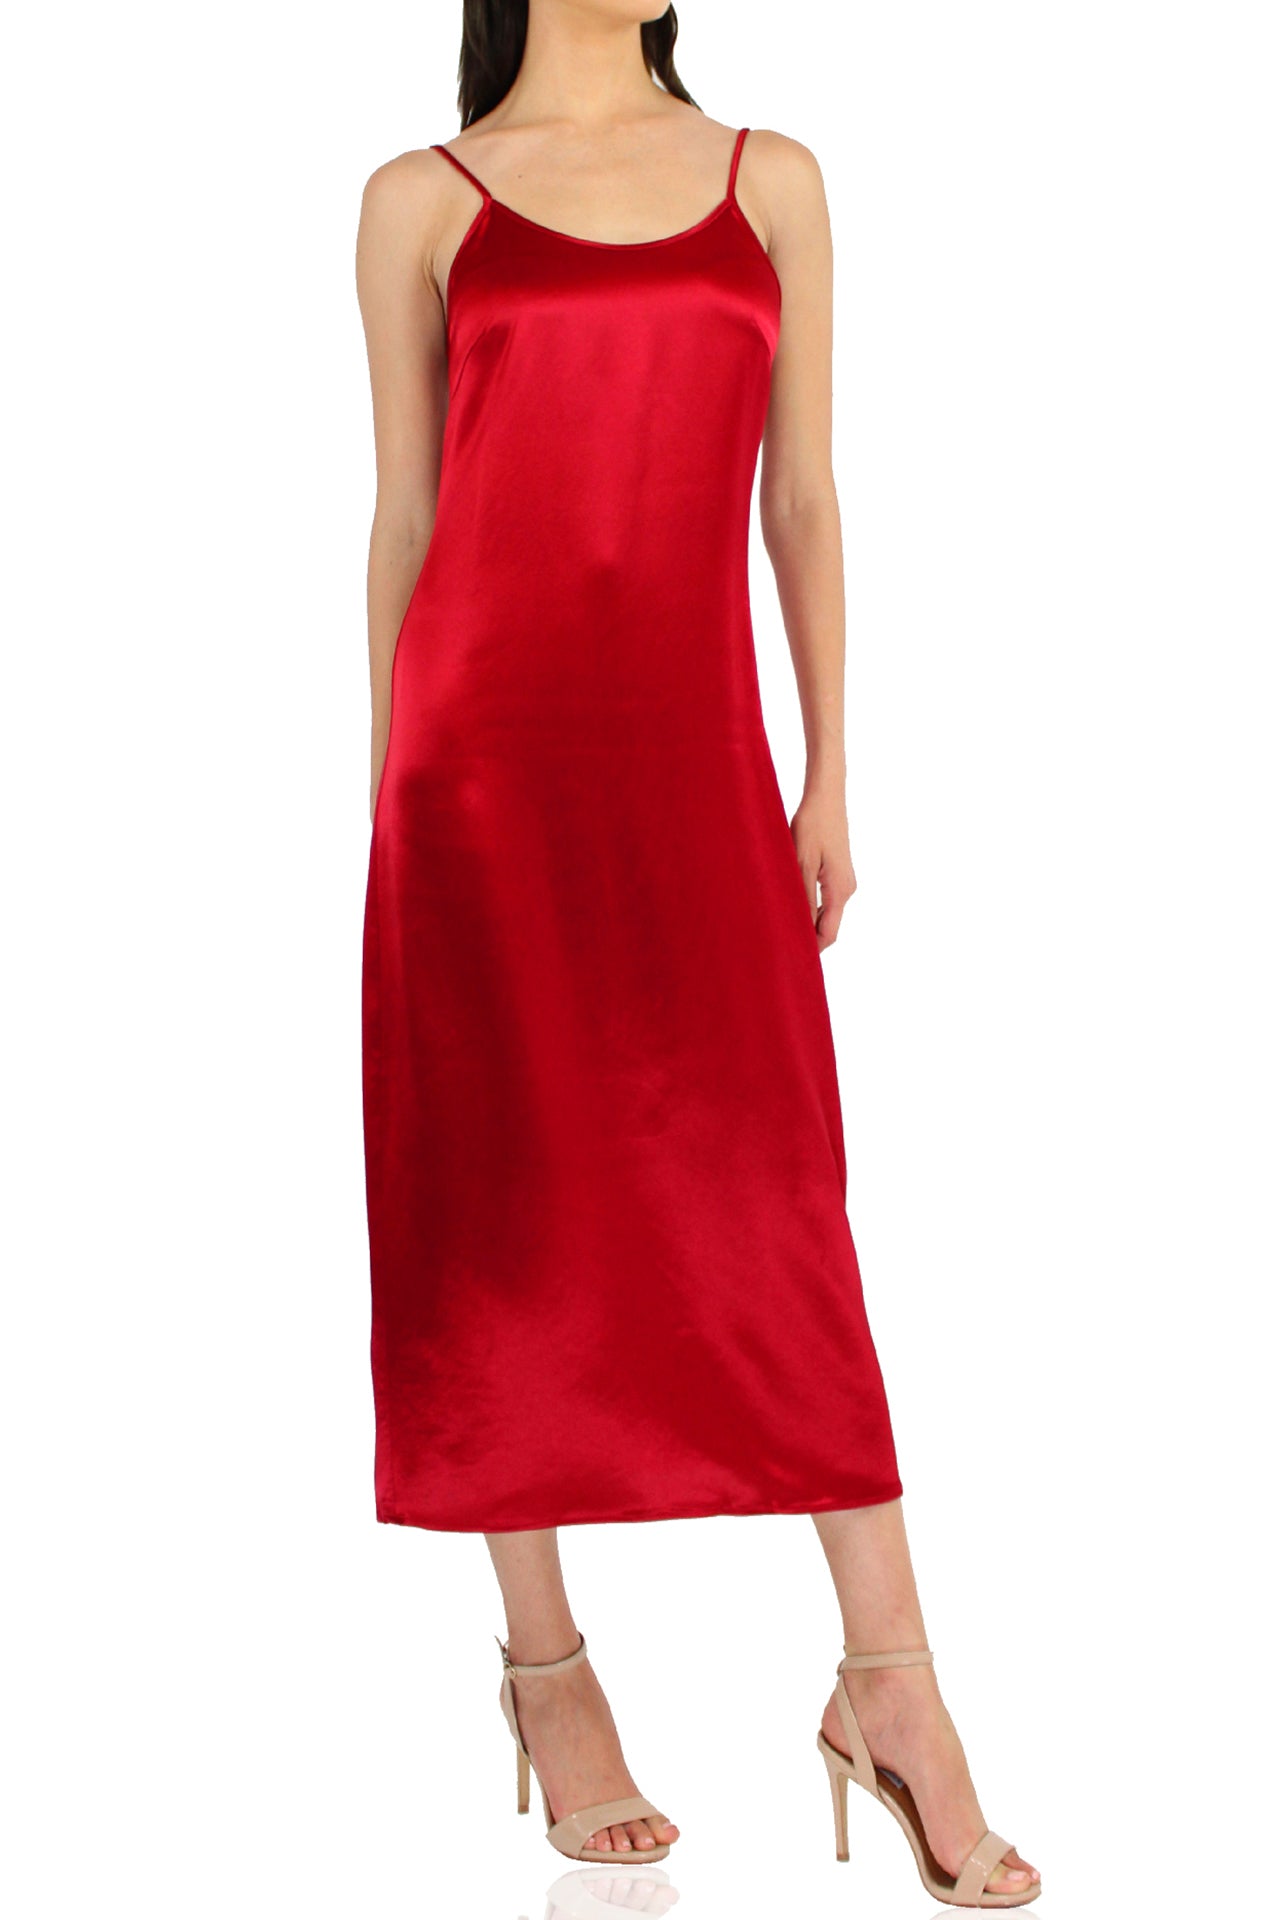 Womens-Designer-Red-Midi-Dress-By-Kyle